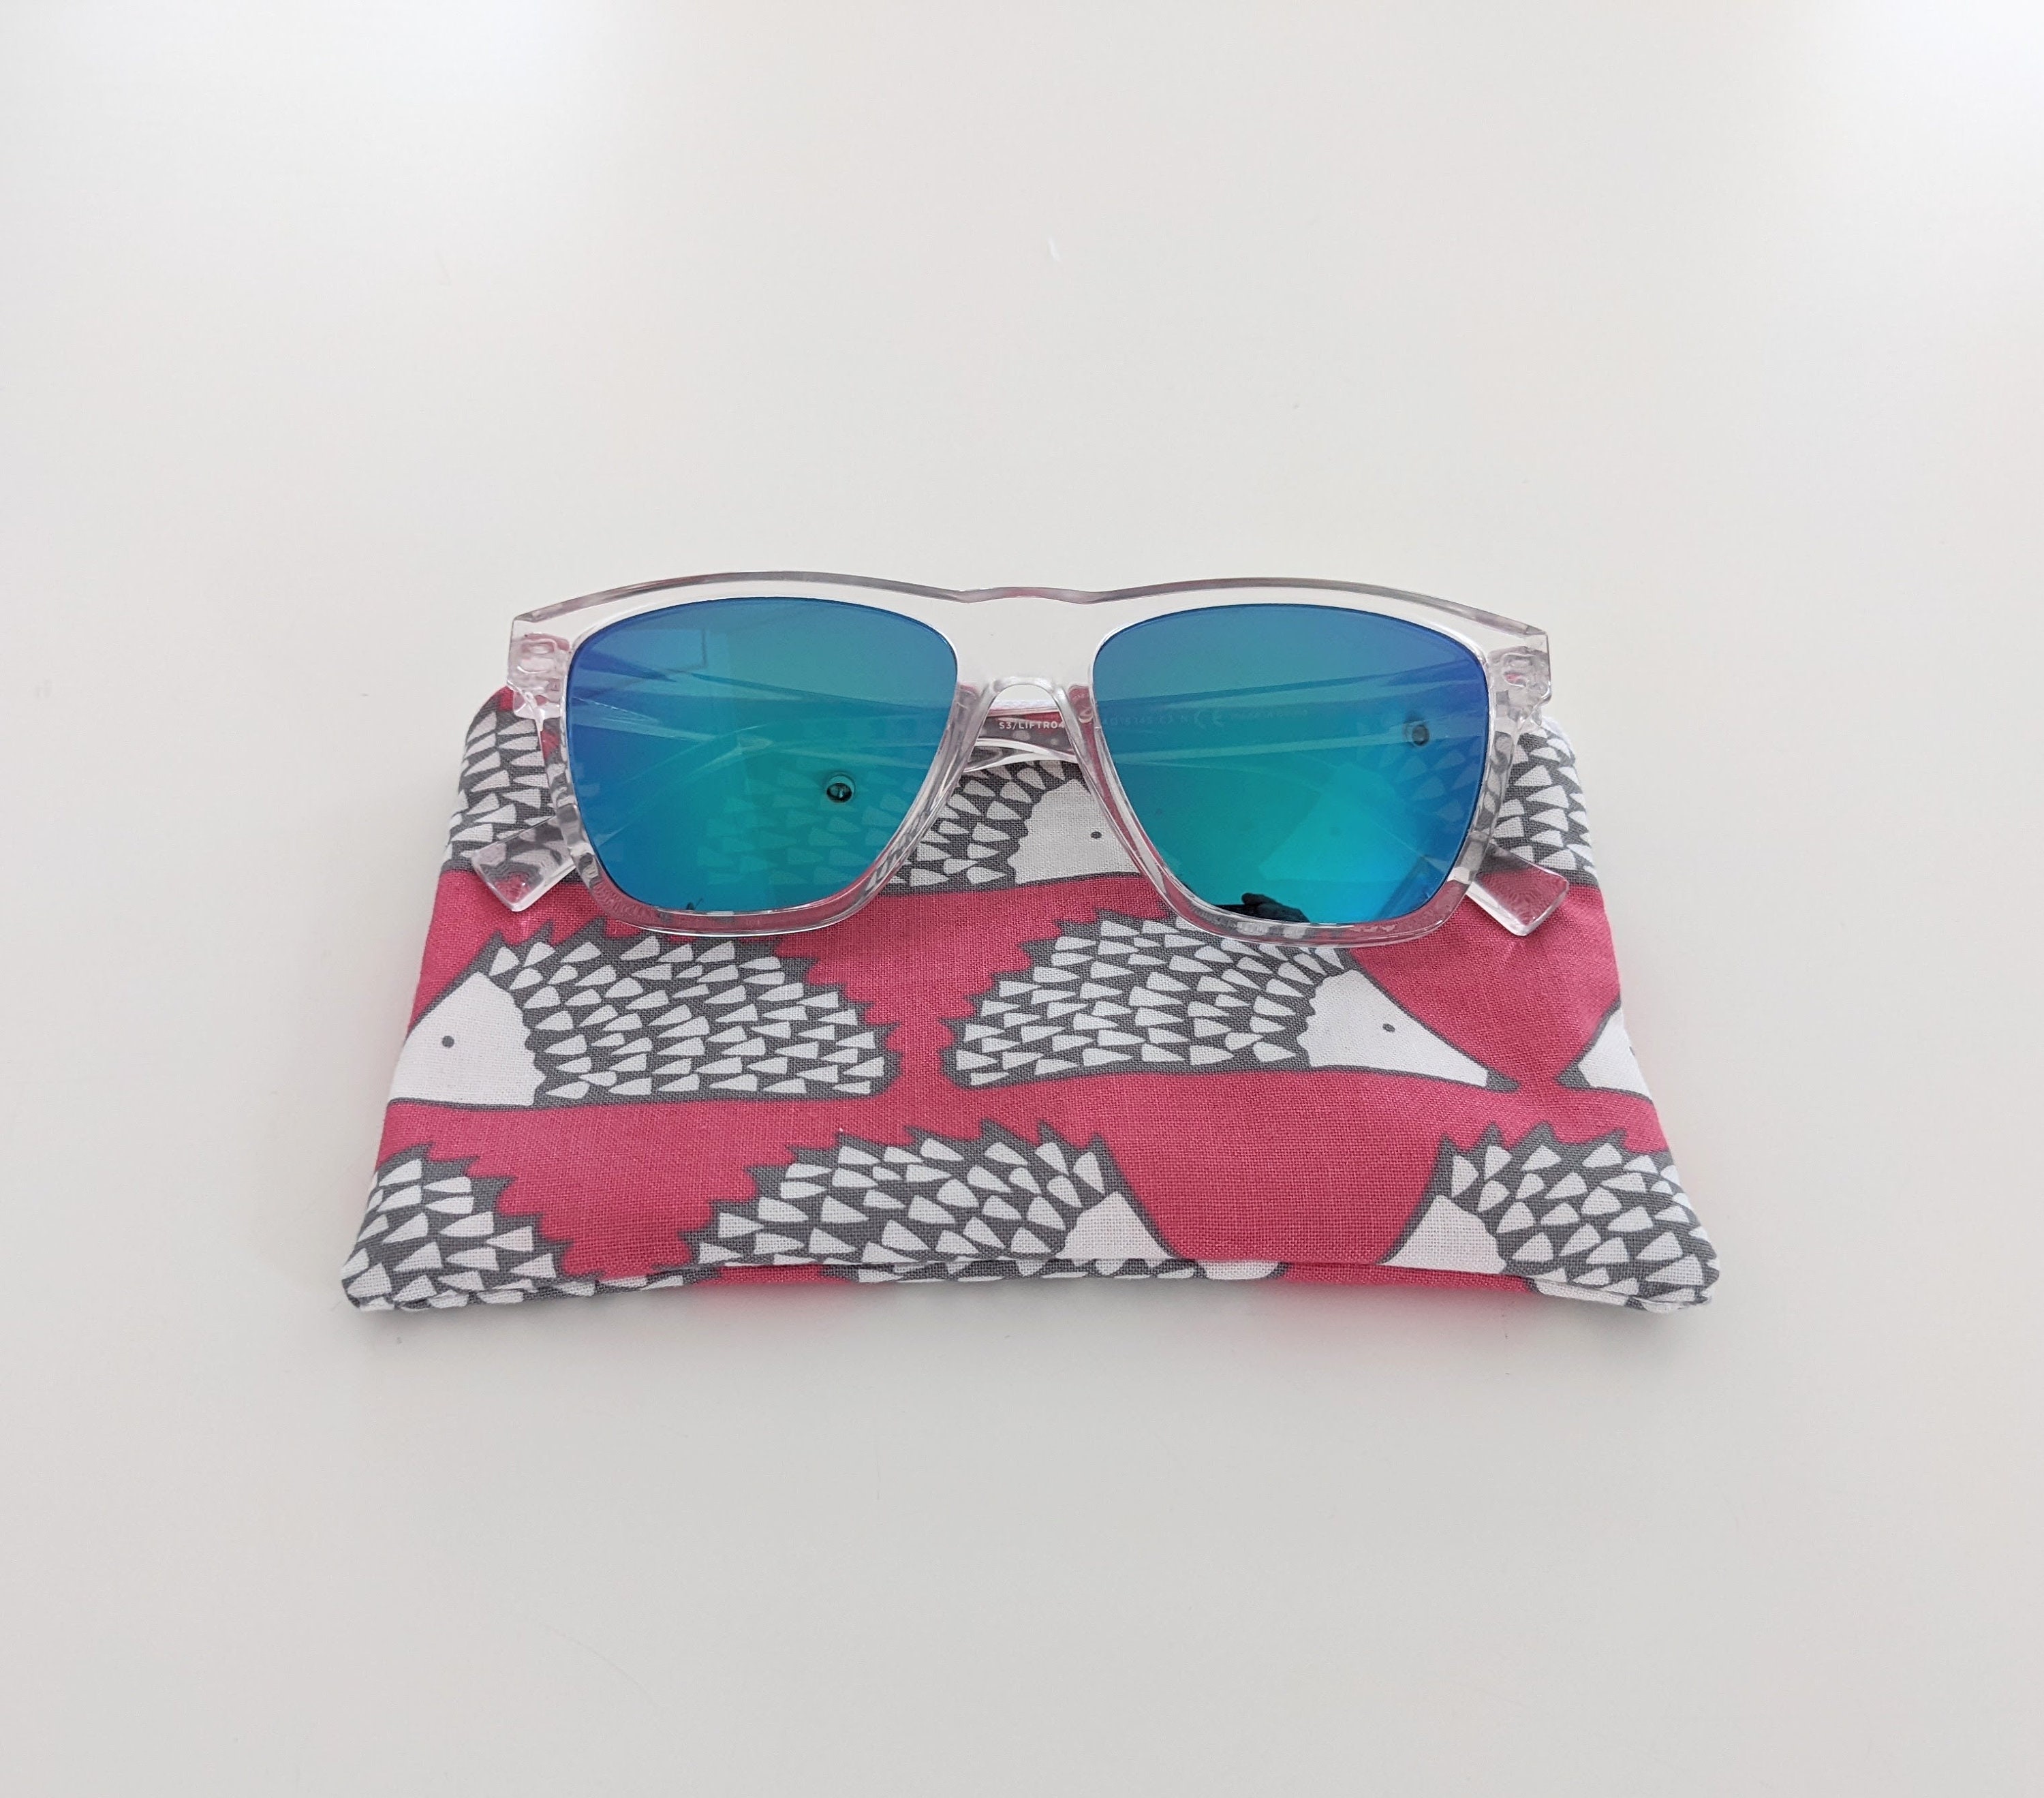 Naimo Novelty Rivet Stud Spikes Sunglasses Funny Party Hedgehog Eye Glasses 